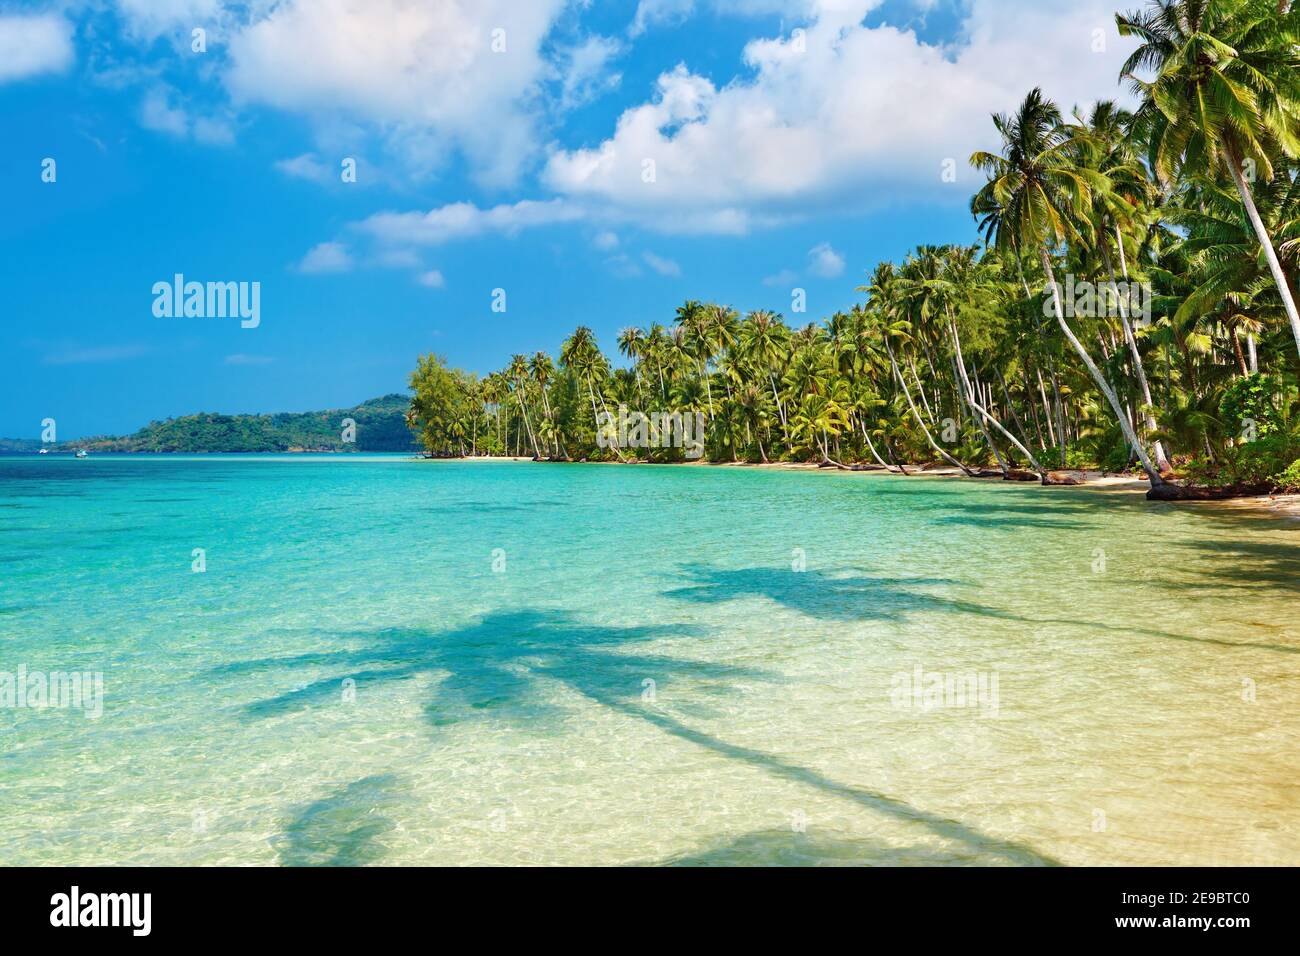 Coconut palms on the beach, Kood island, Thailand Stock Photo